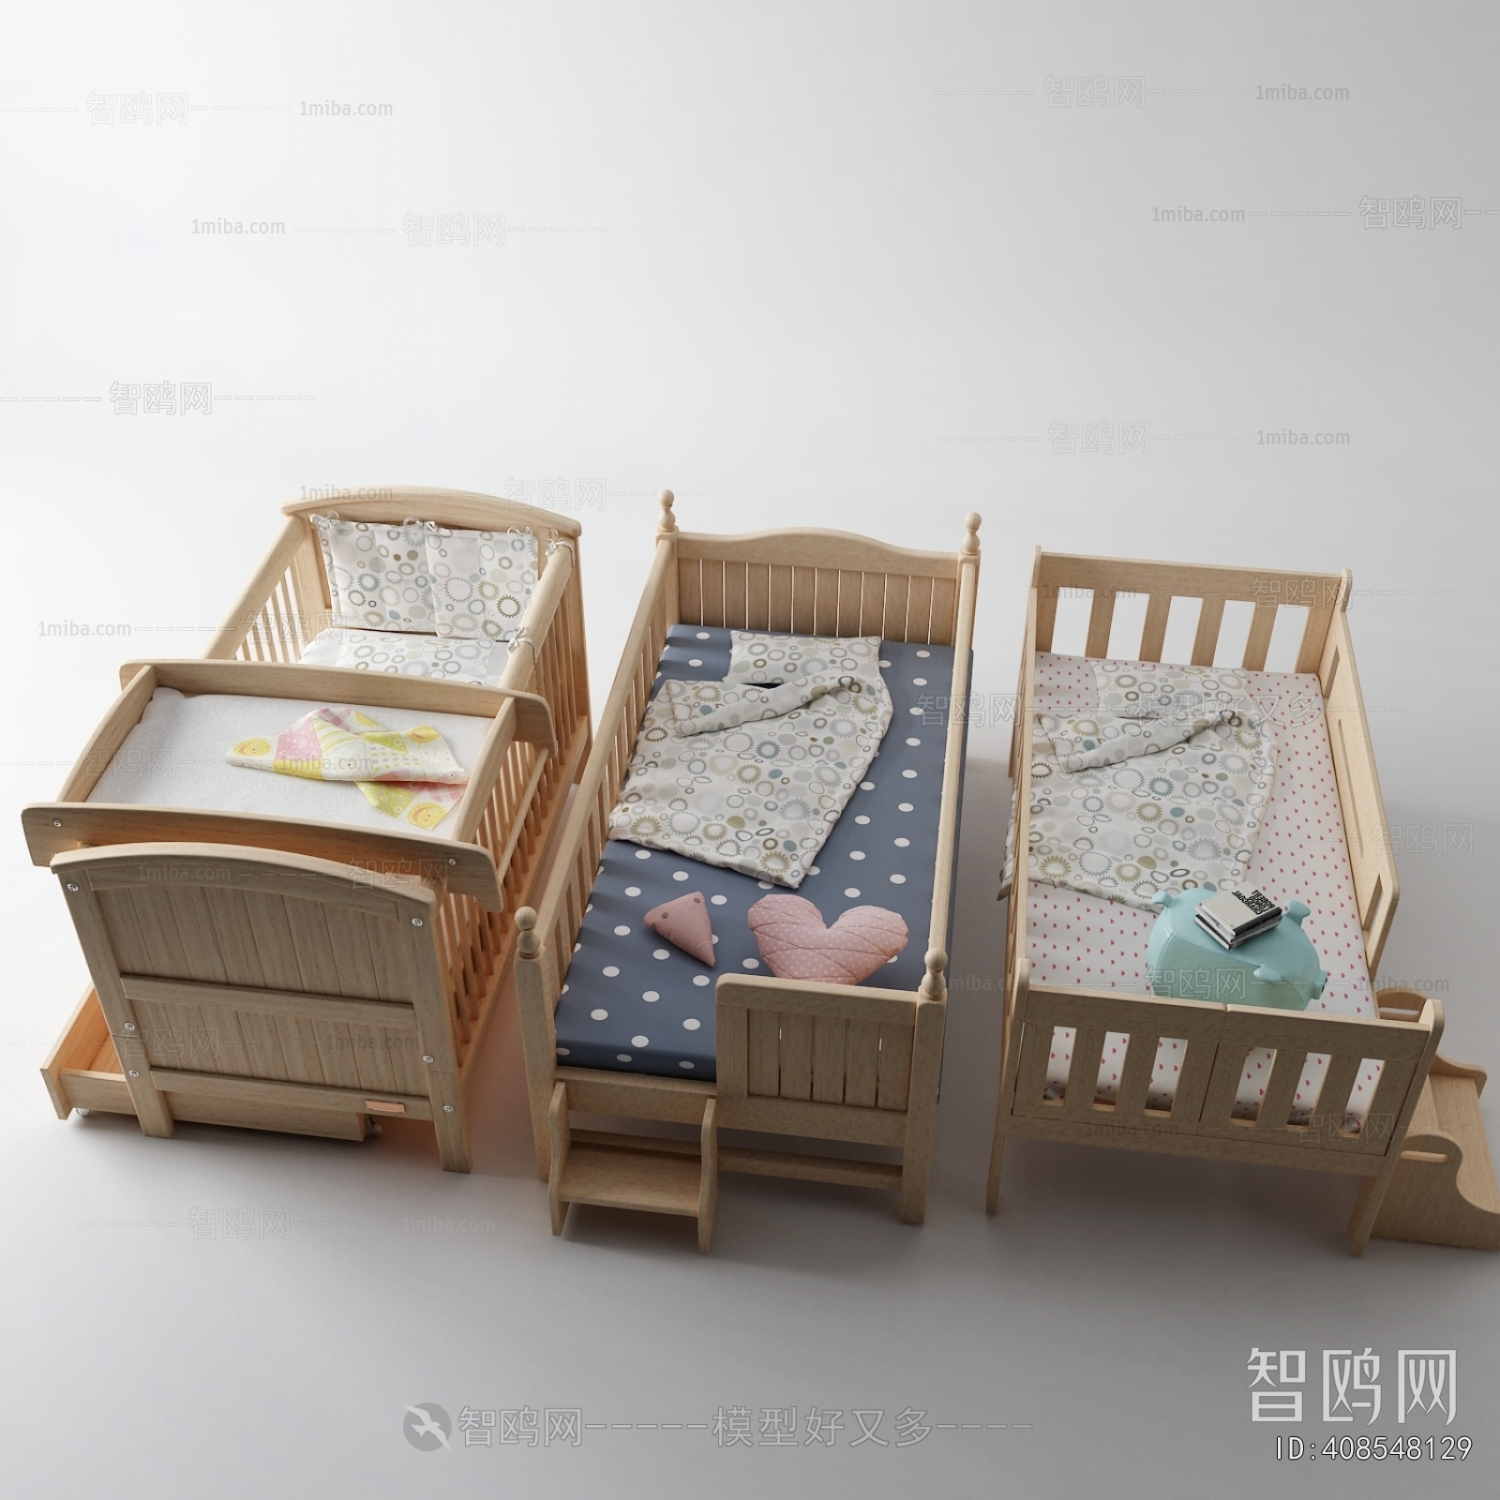 Modern Crib